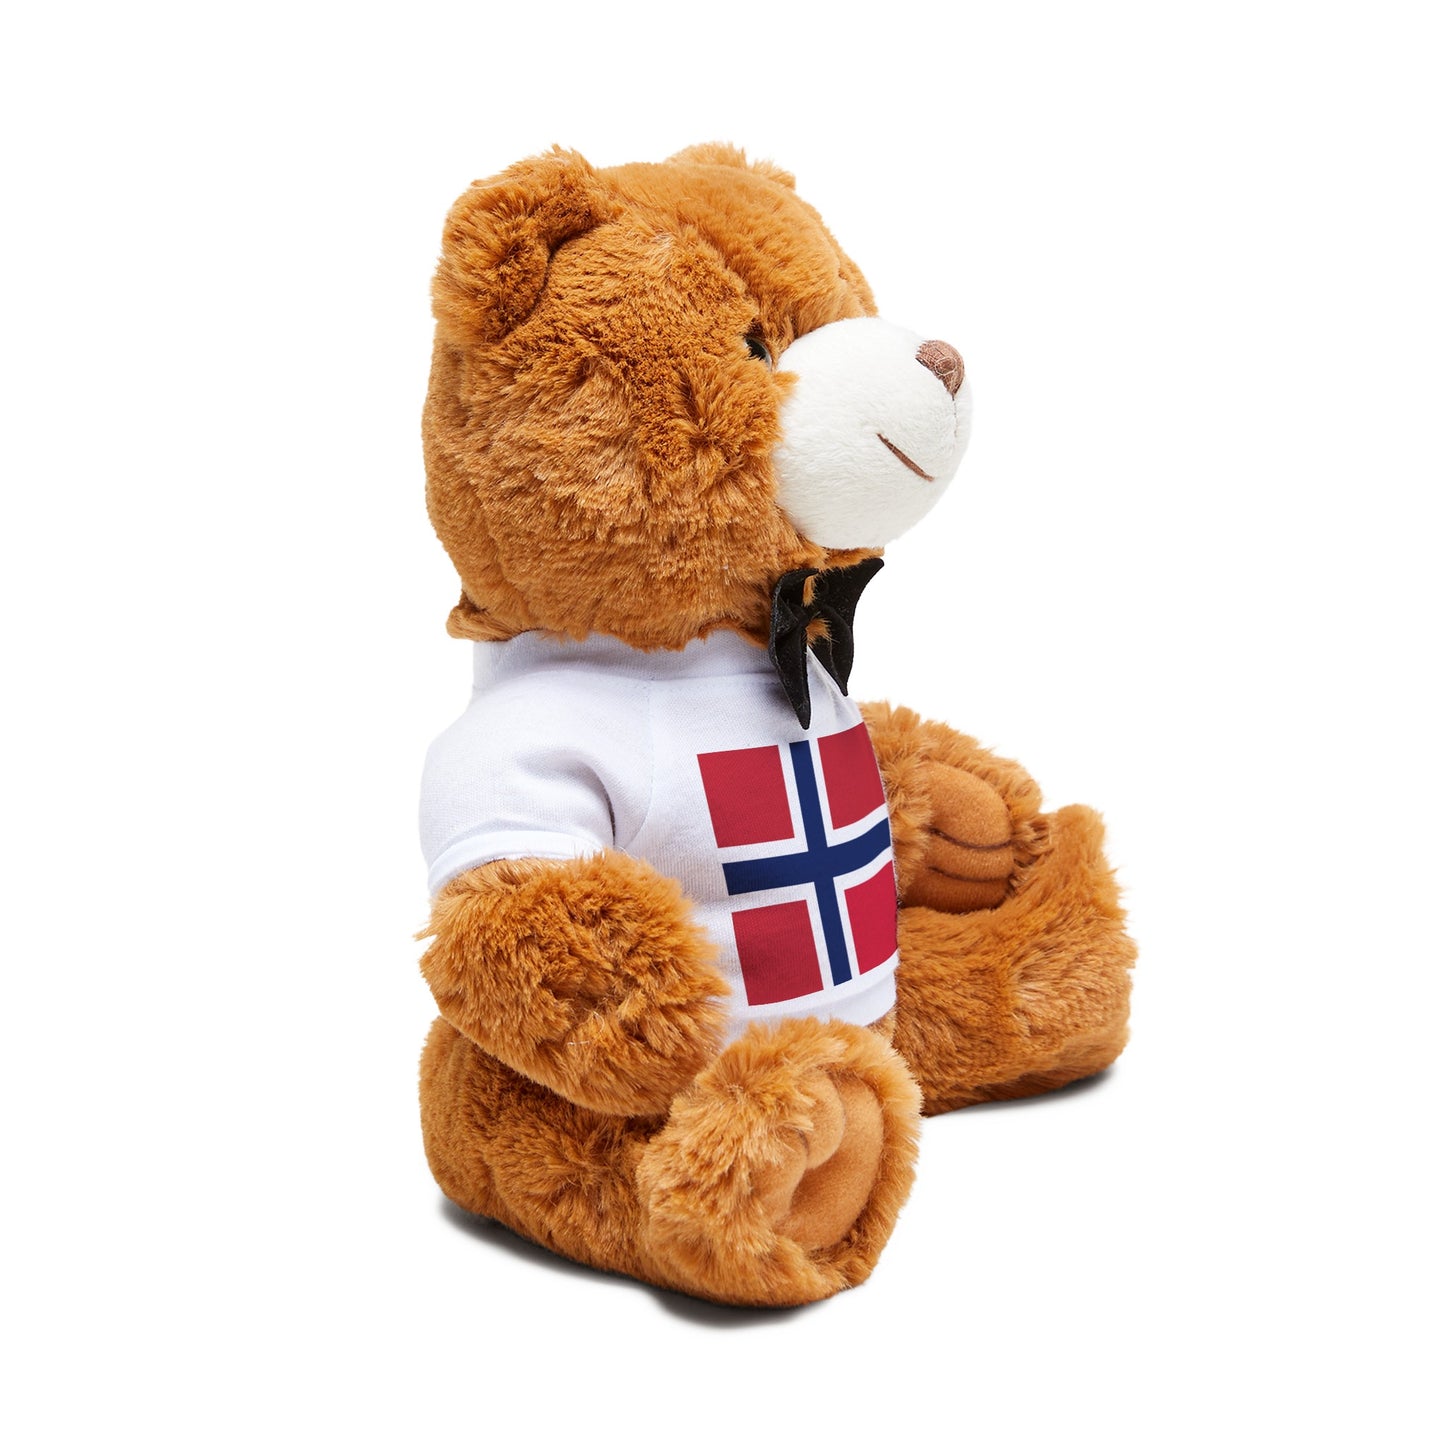 Norwegian Pride Teddy Bear Norway Toy Norwegian Stuffed Animal May 17th Toy